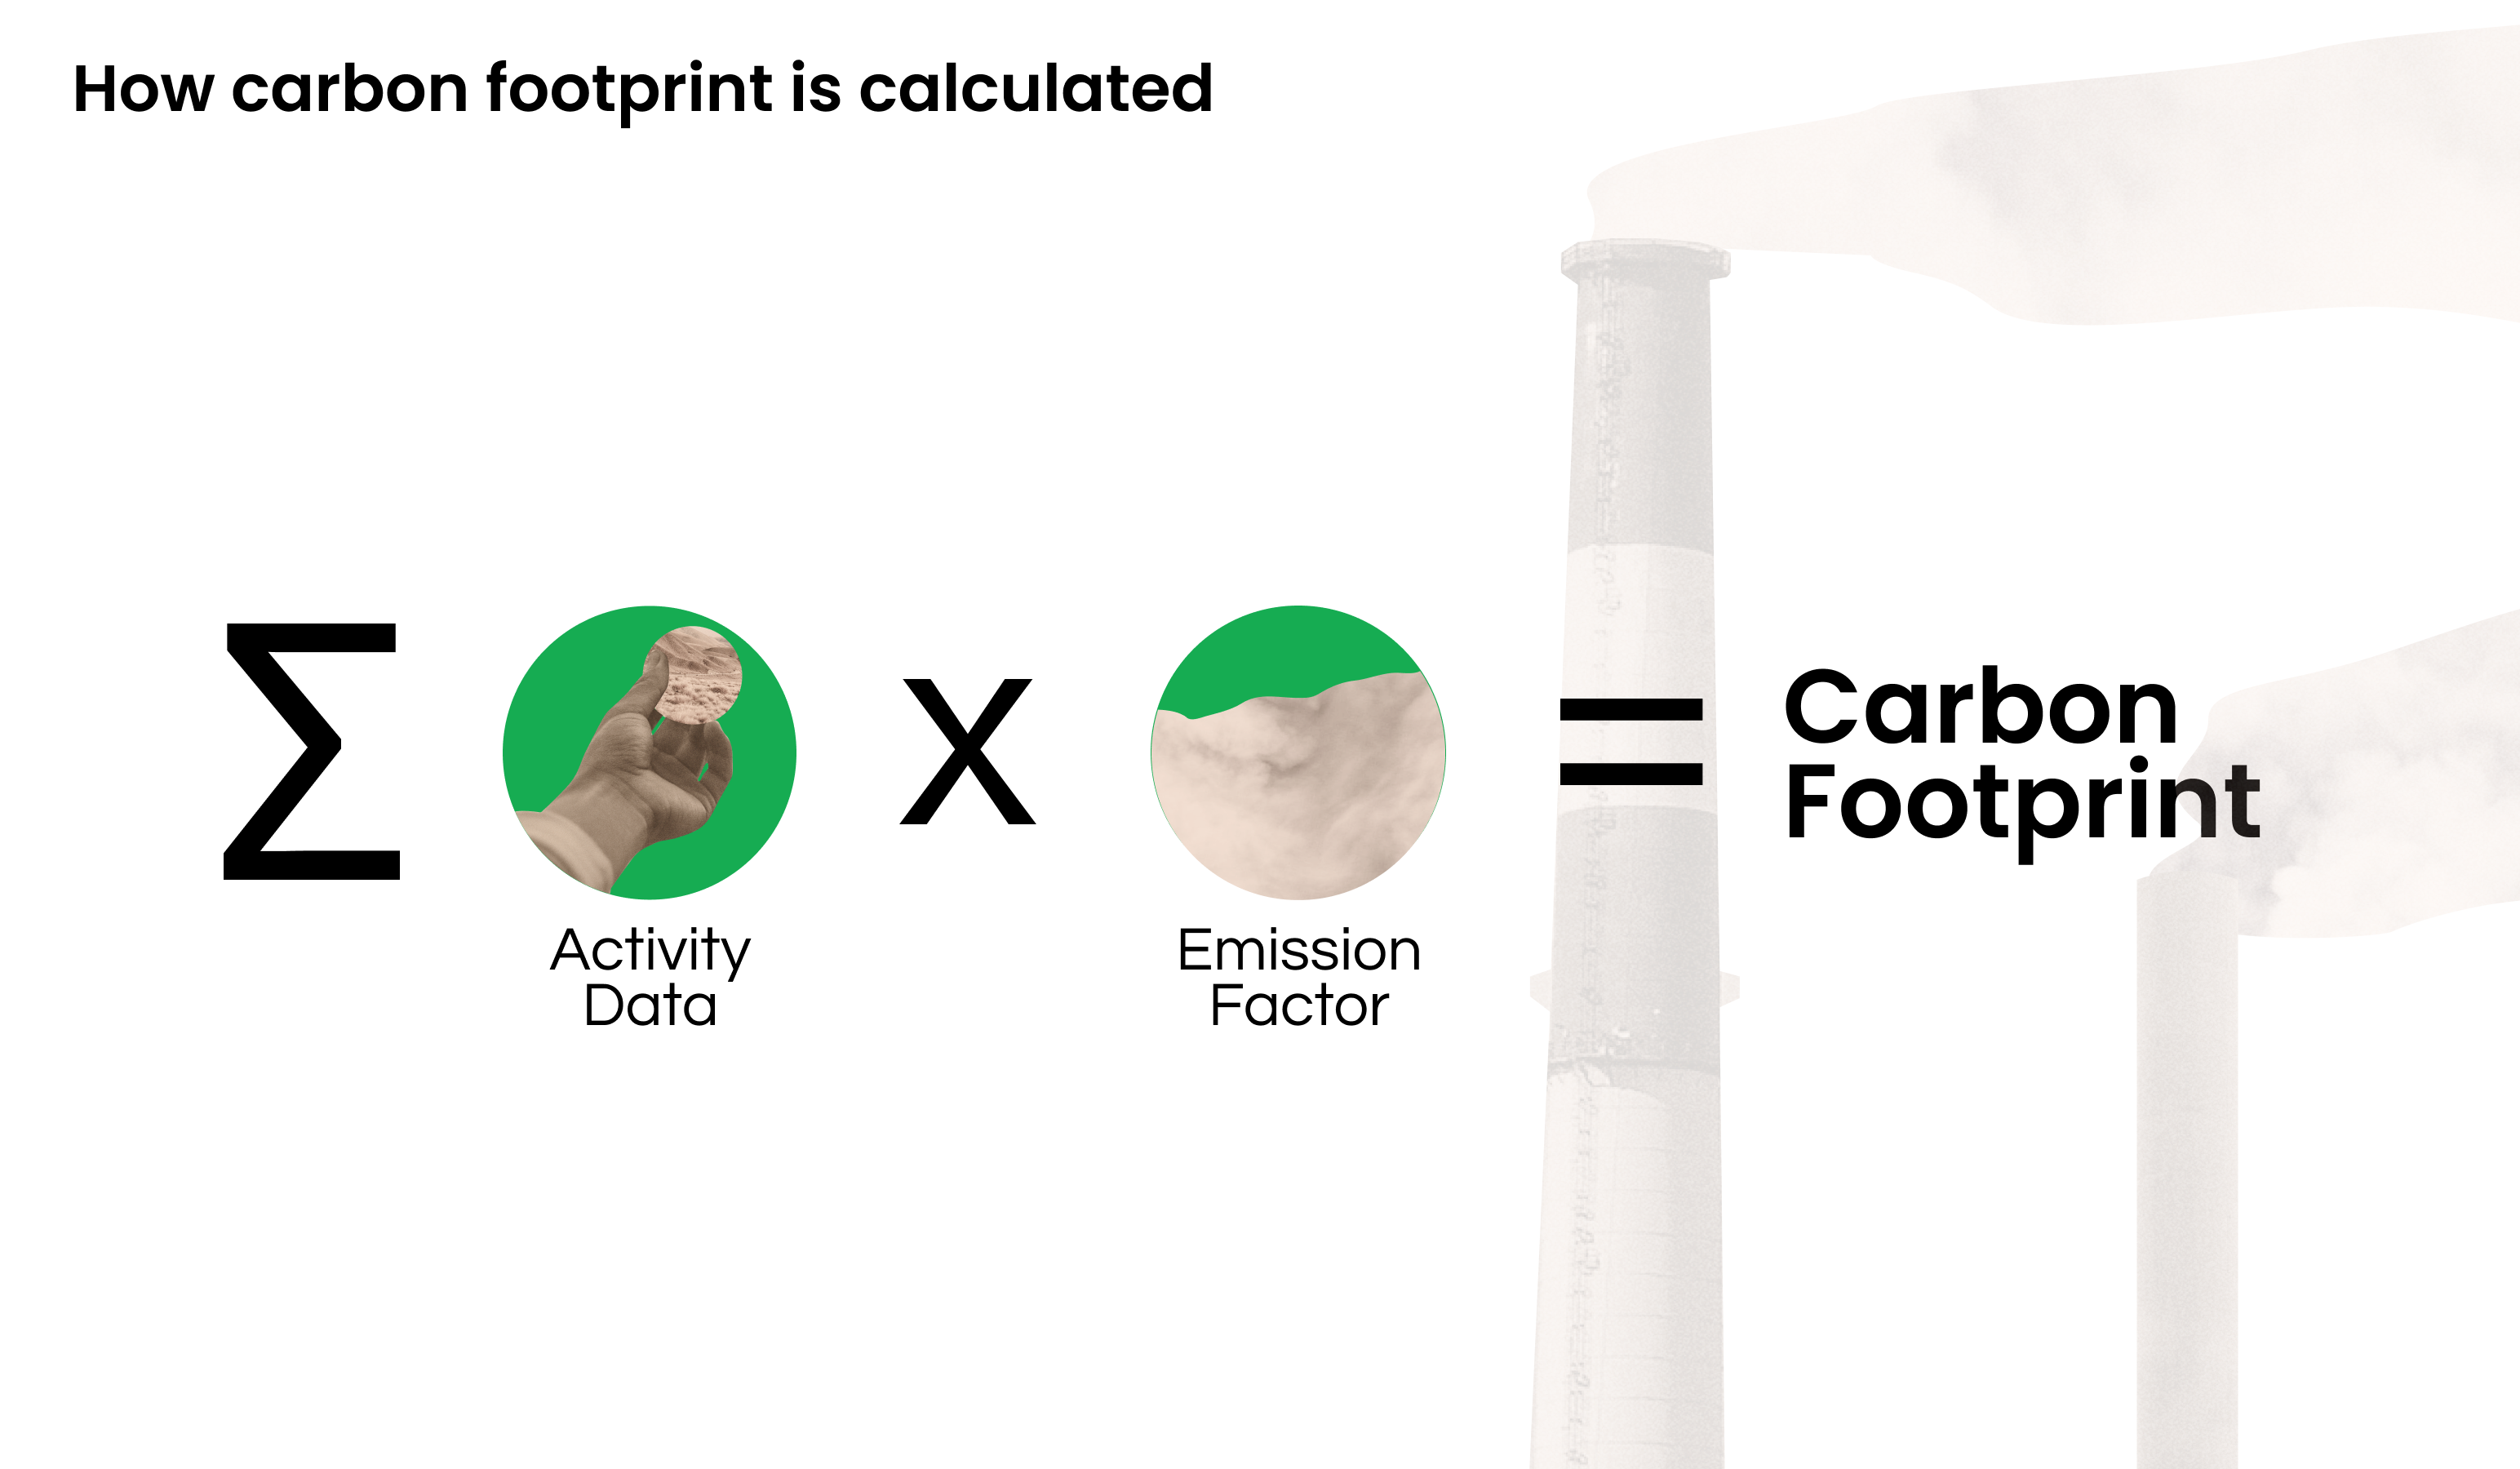 Figure 1. Carbon footprint formula